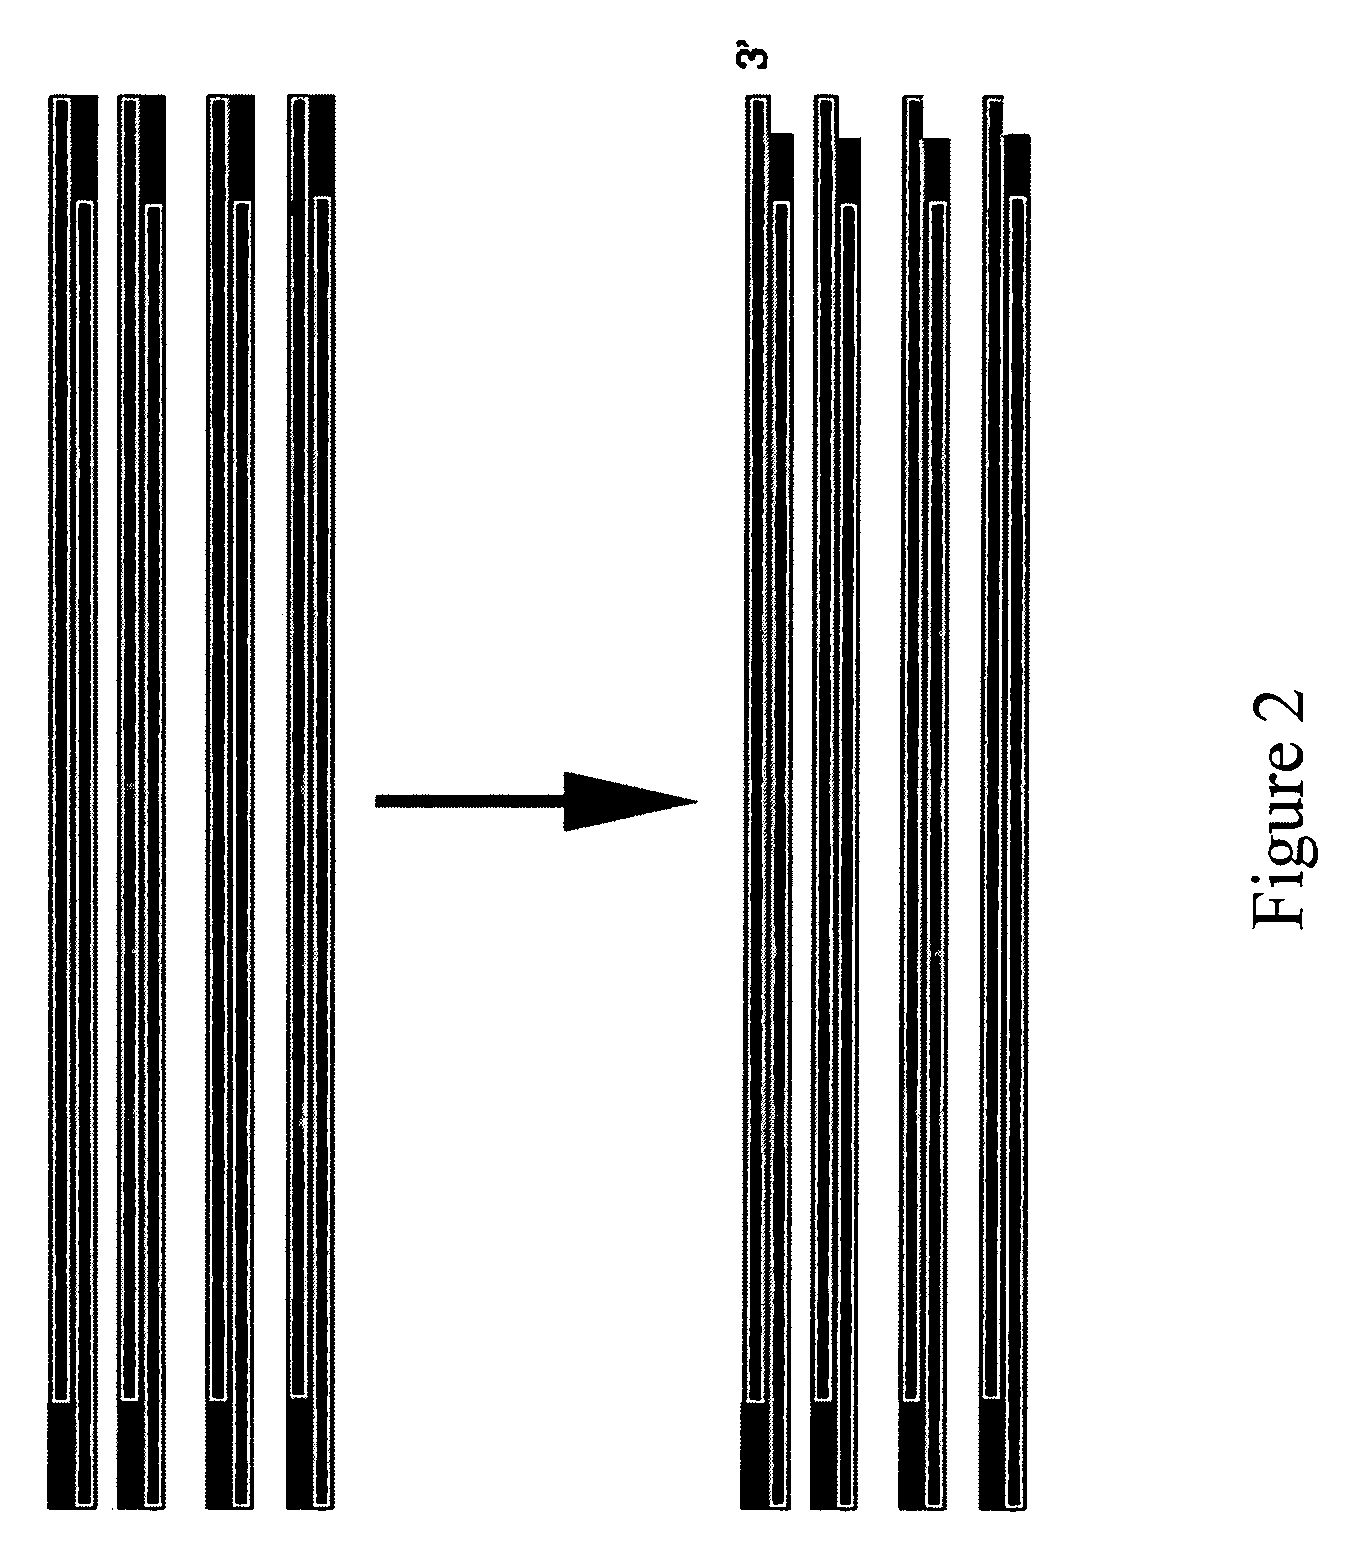 Method for assembling PCR fragments of DNA